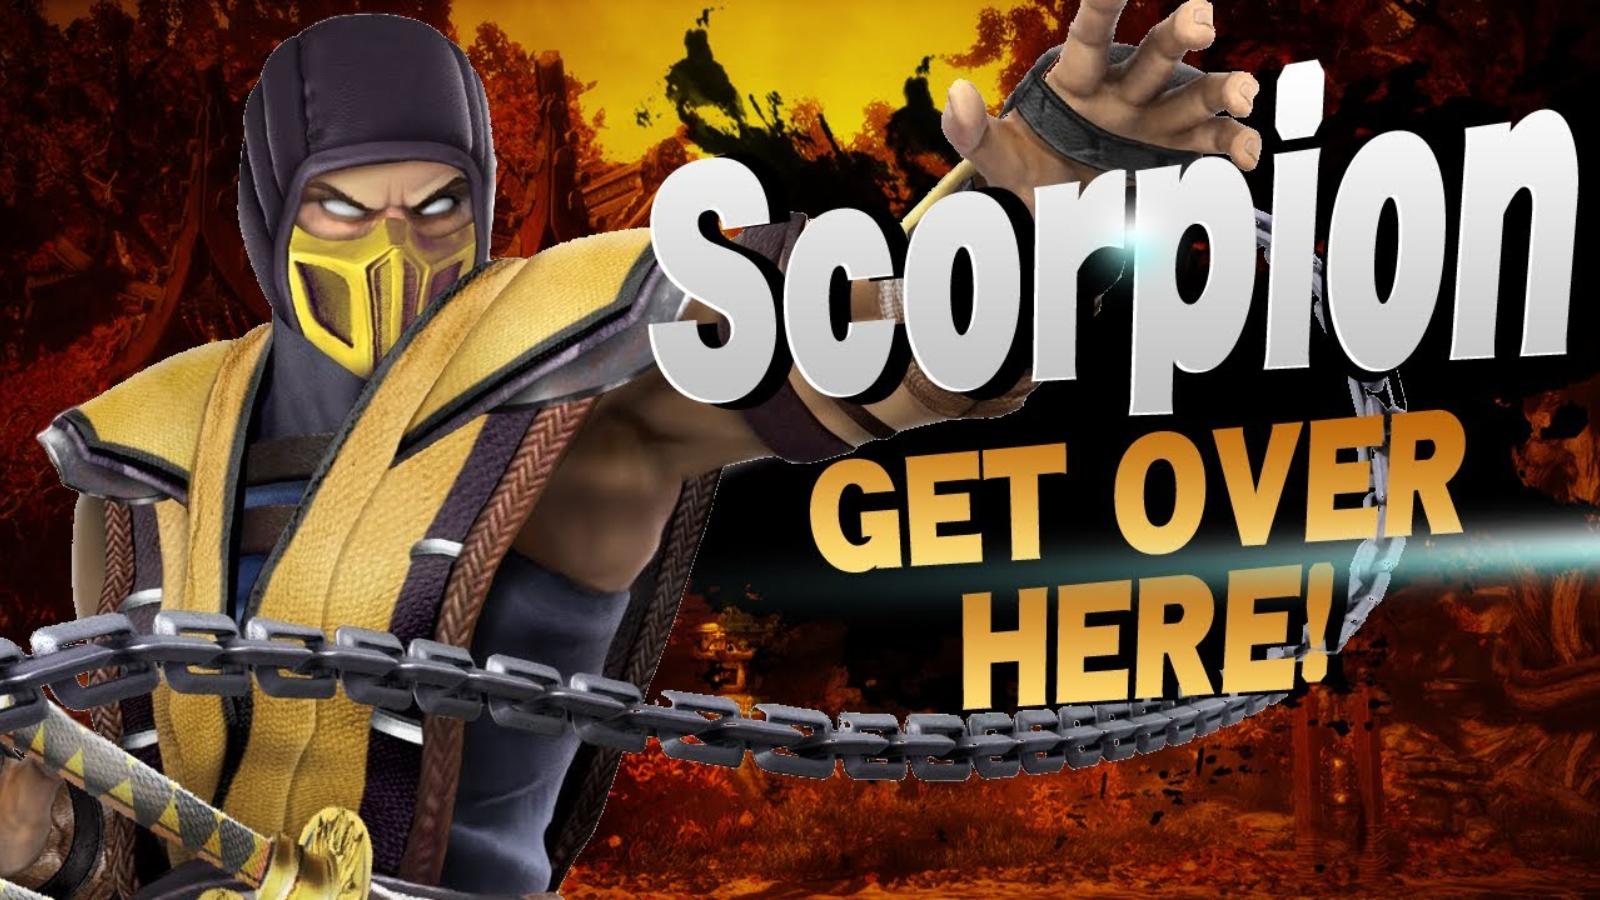 Scorpion Games